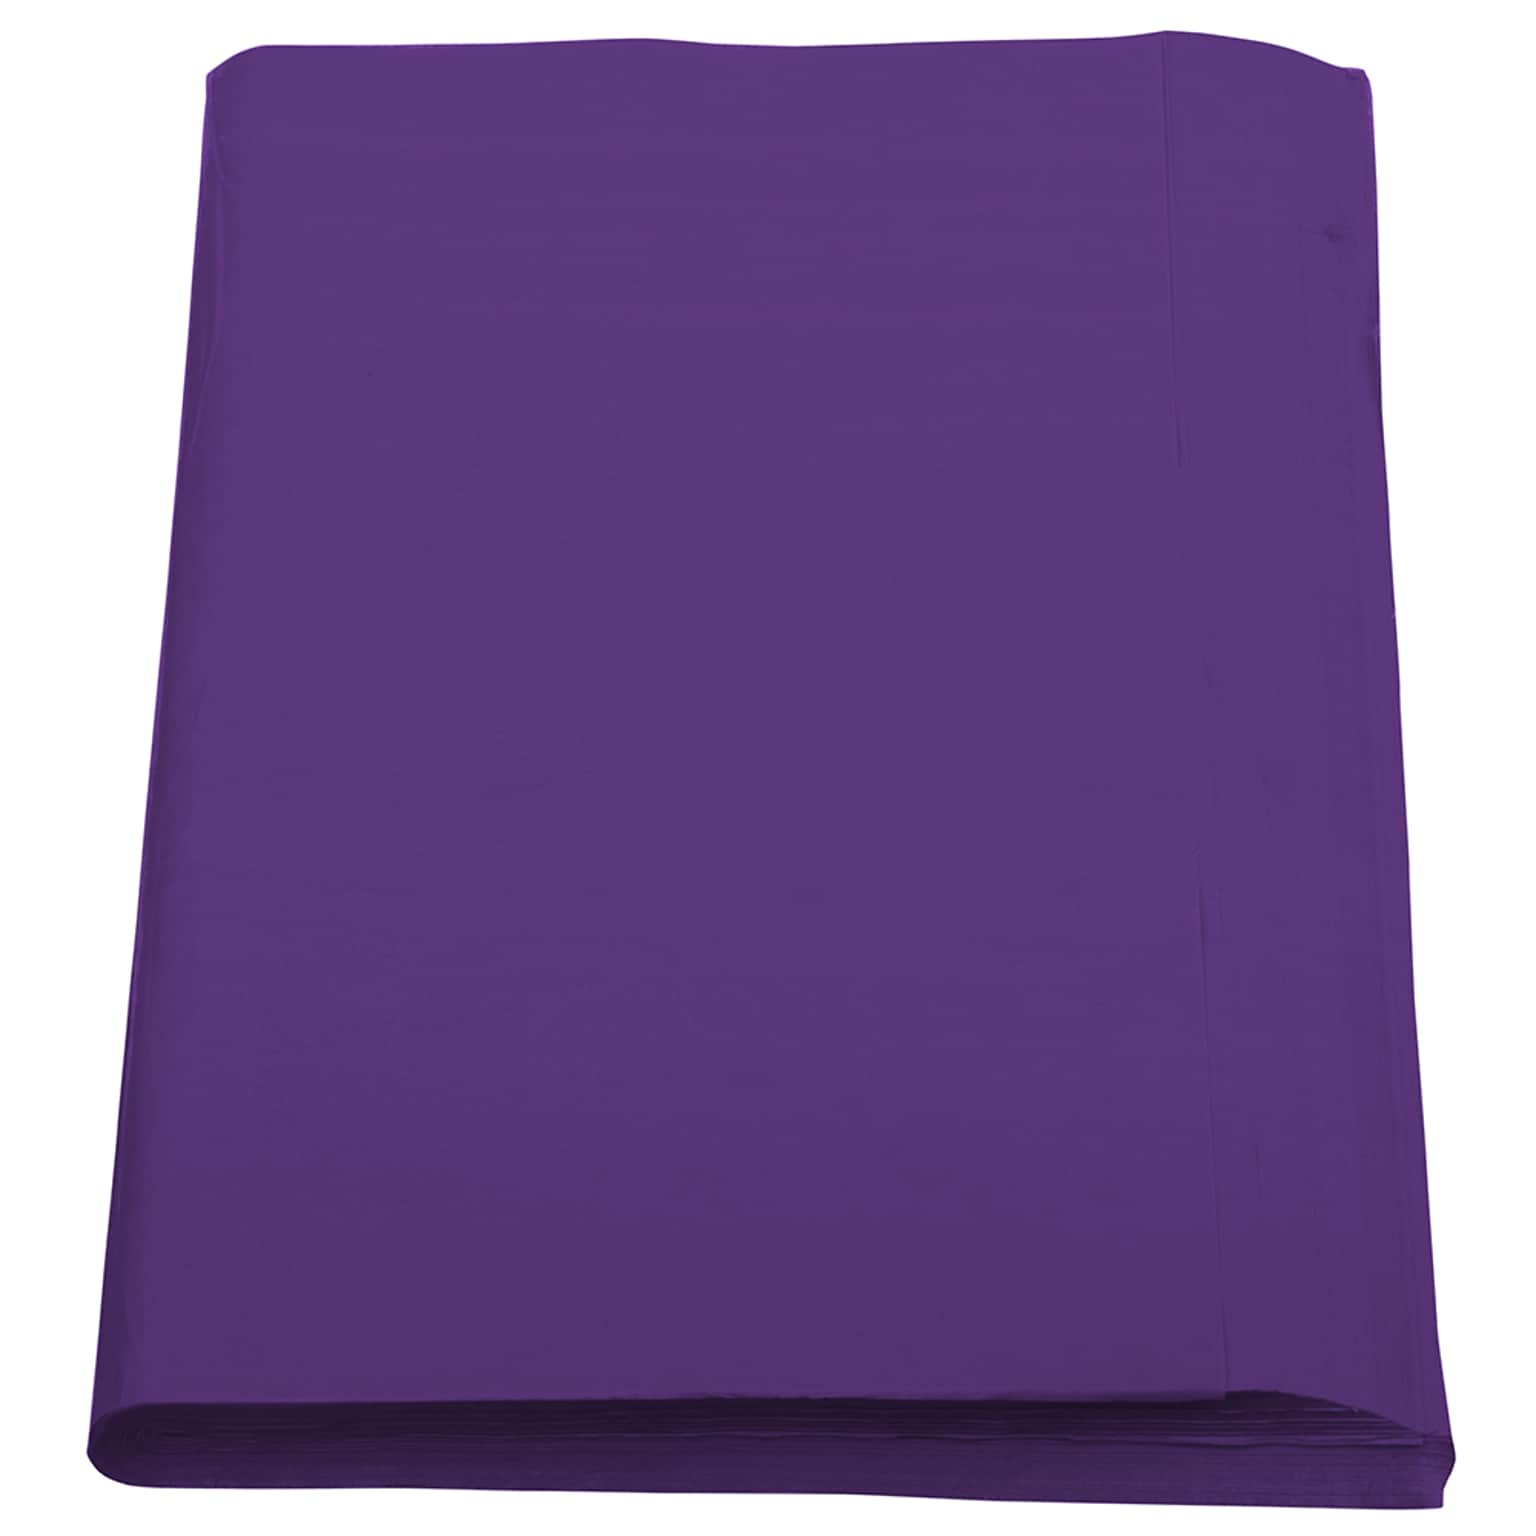 JAM Paper Tissue Paper, Purple, 480 Sheets/Pack (1152385)